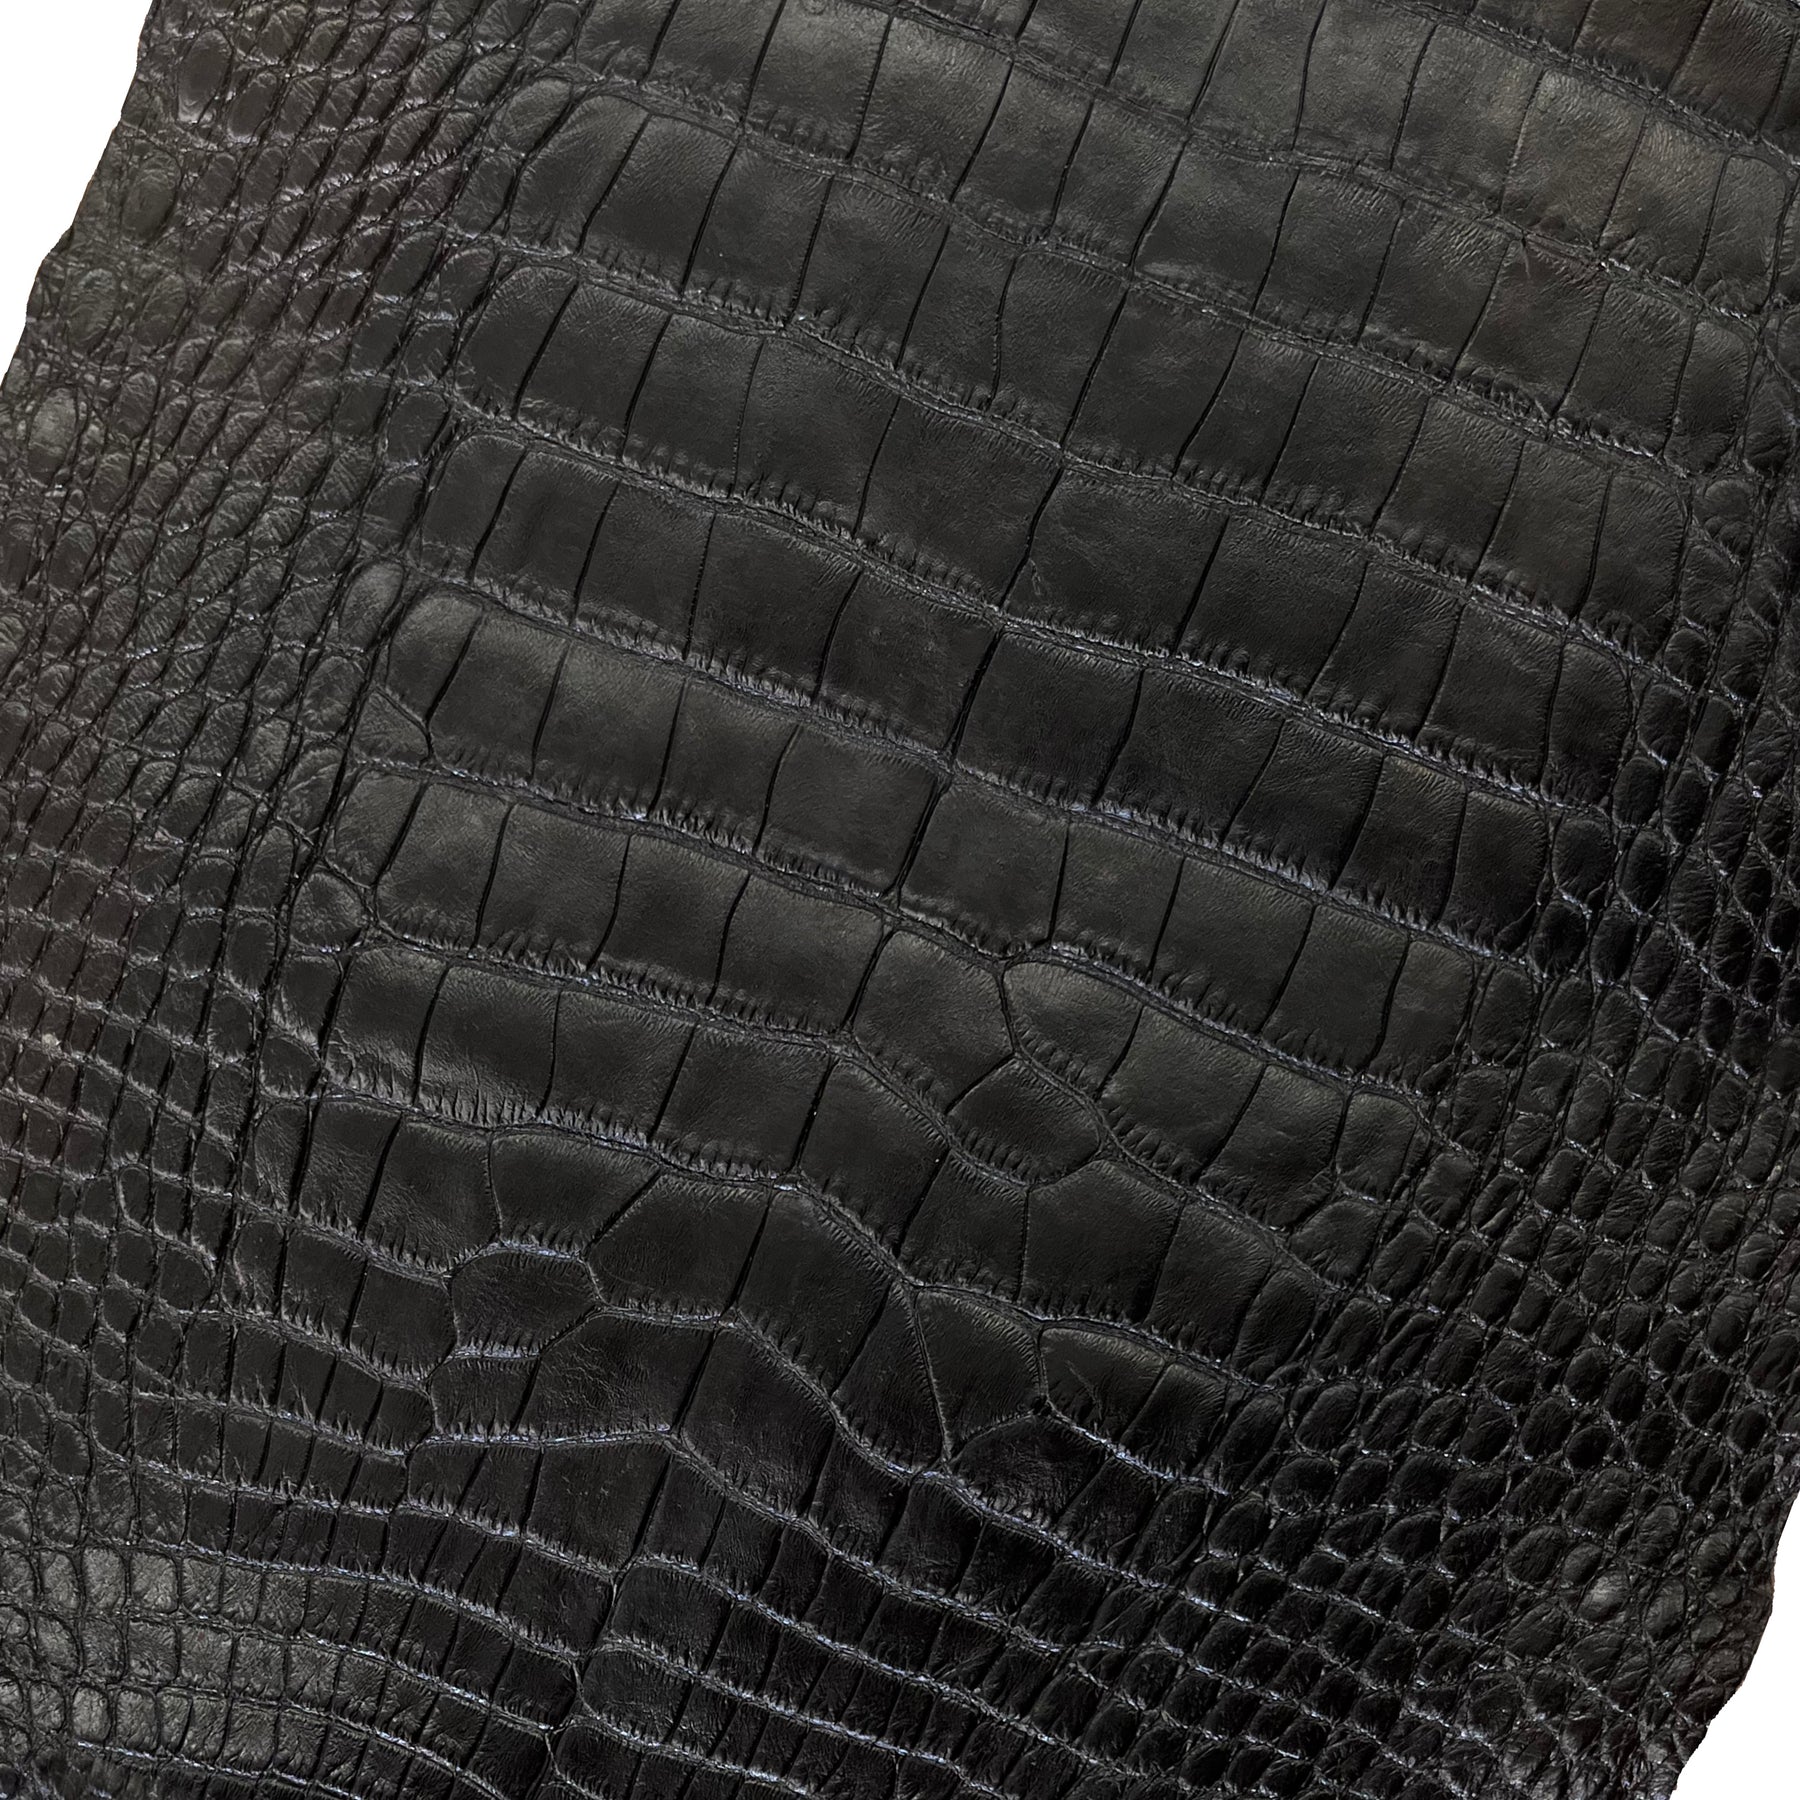 Wild American Alligator Semi-Glazed Black | 34 cm